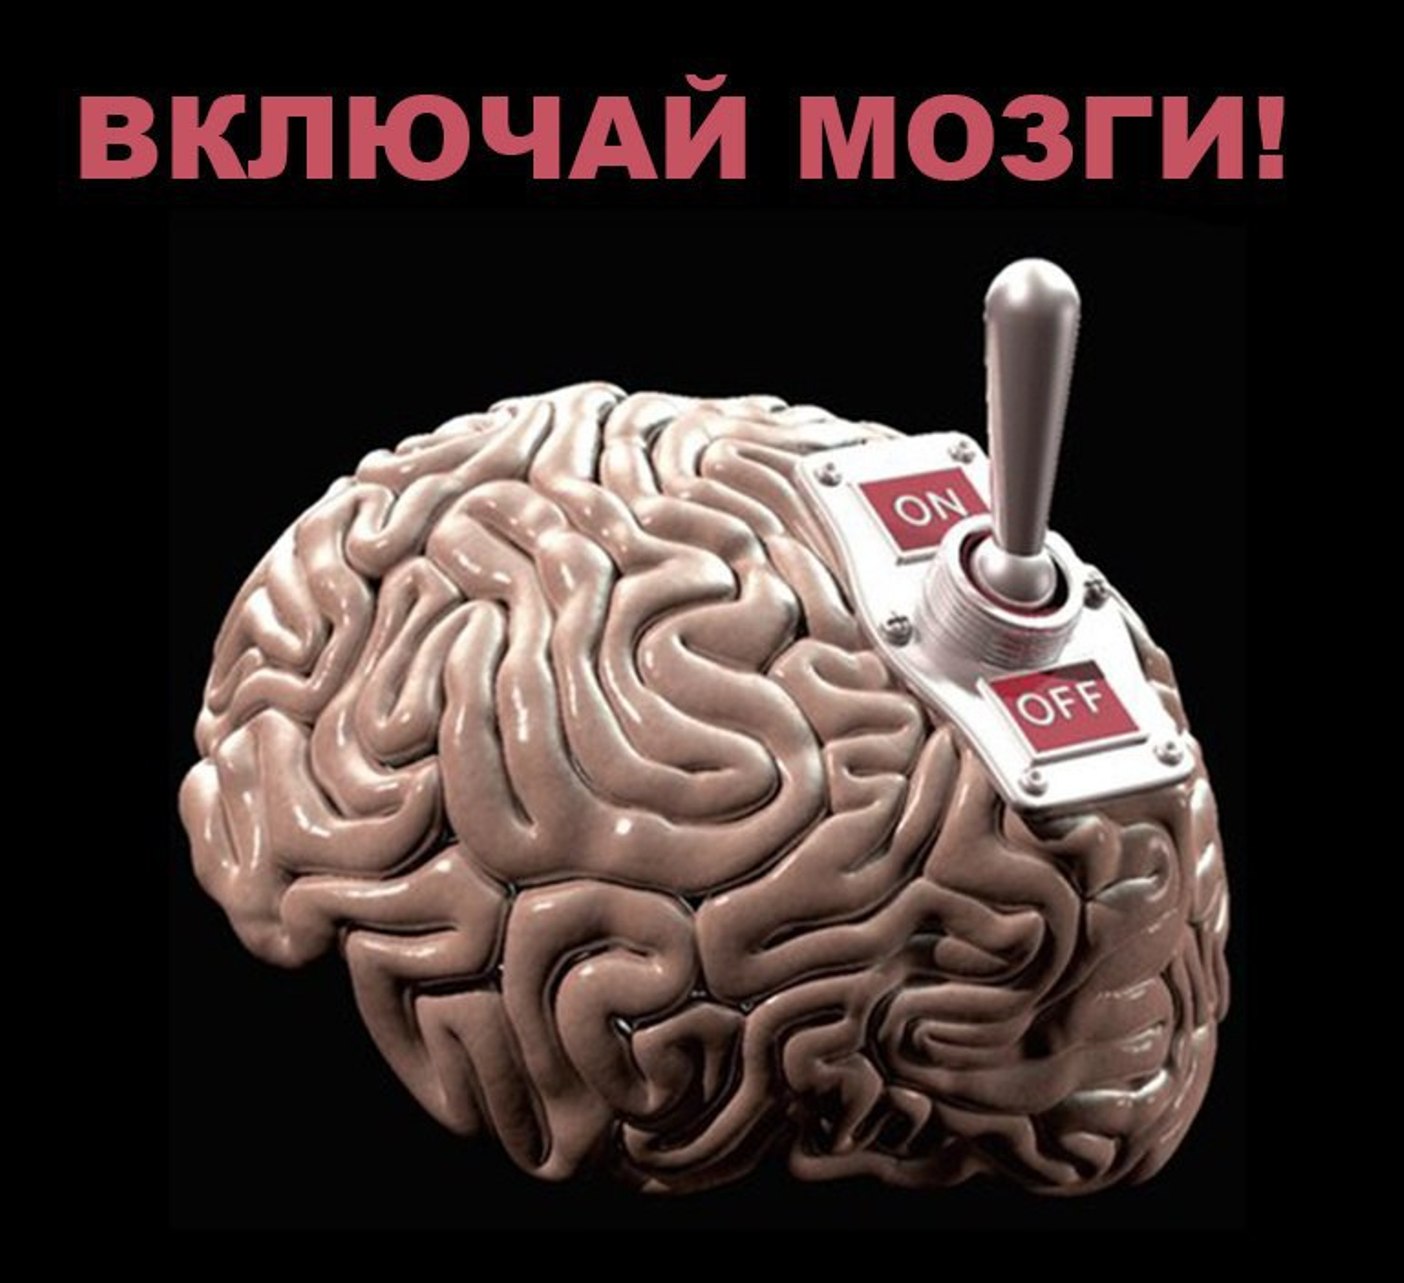 Мозги училки купить. Включить мозг. Включи мозги. Переключатель в мозгу. Включи мозг.